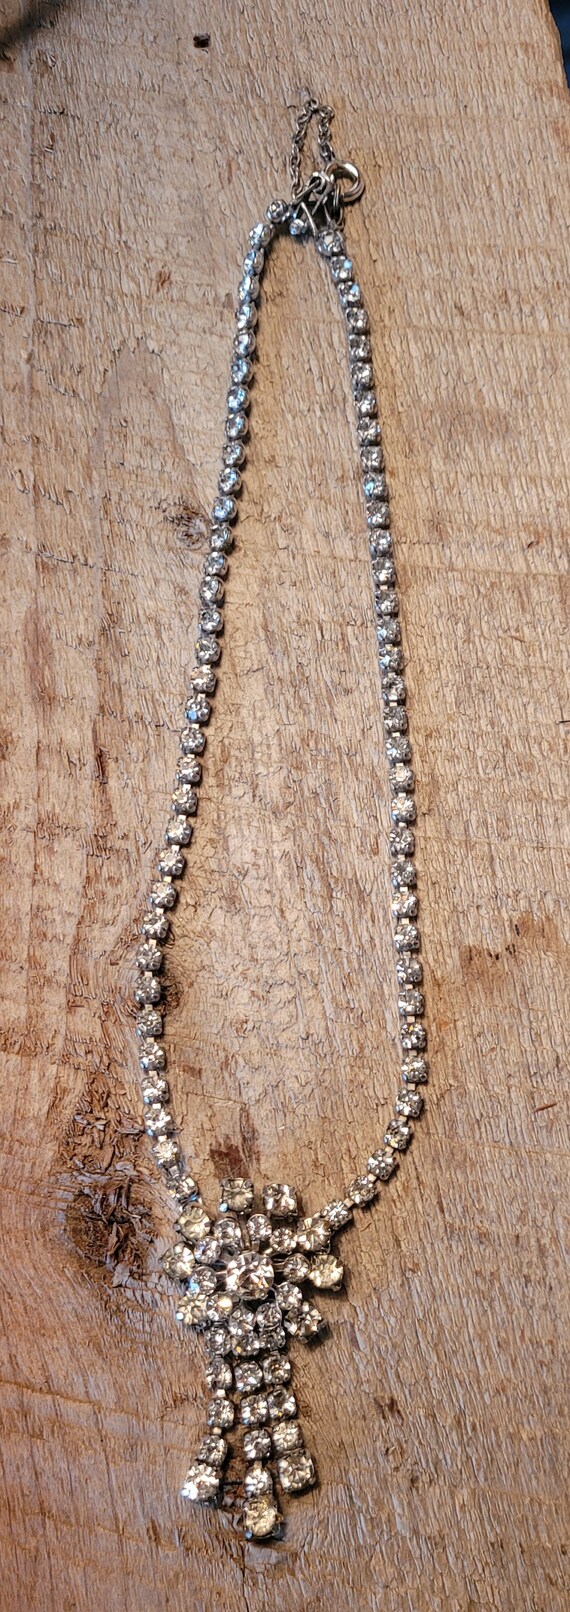 Vintage rhinestone/crystal necklace - image 3